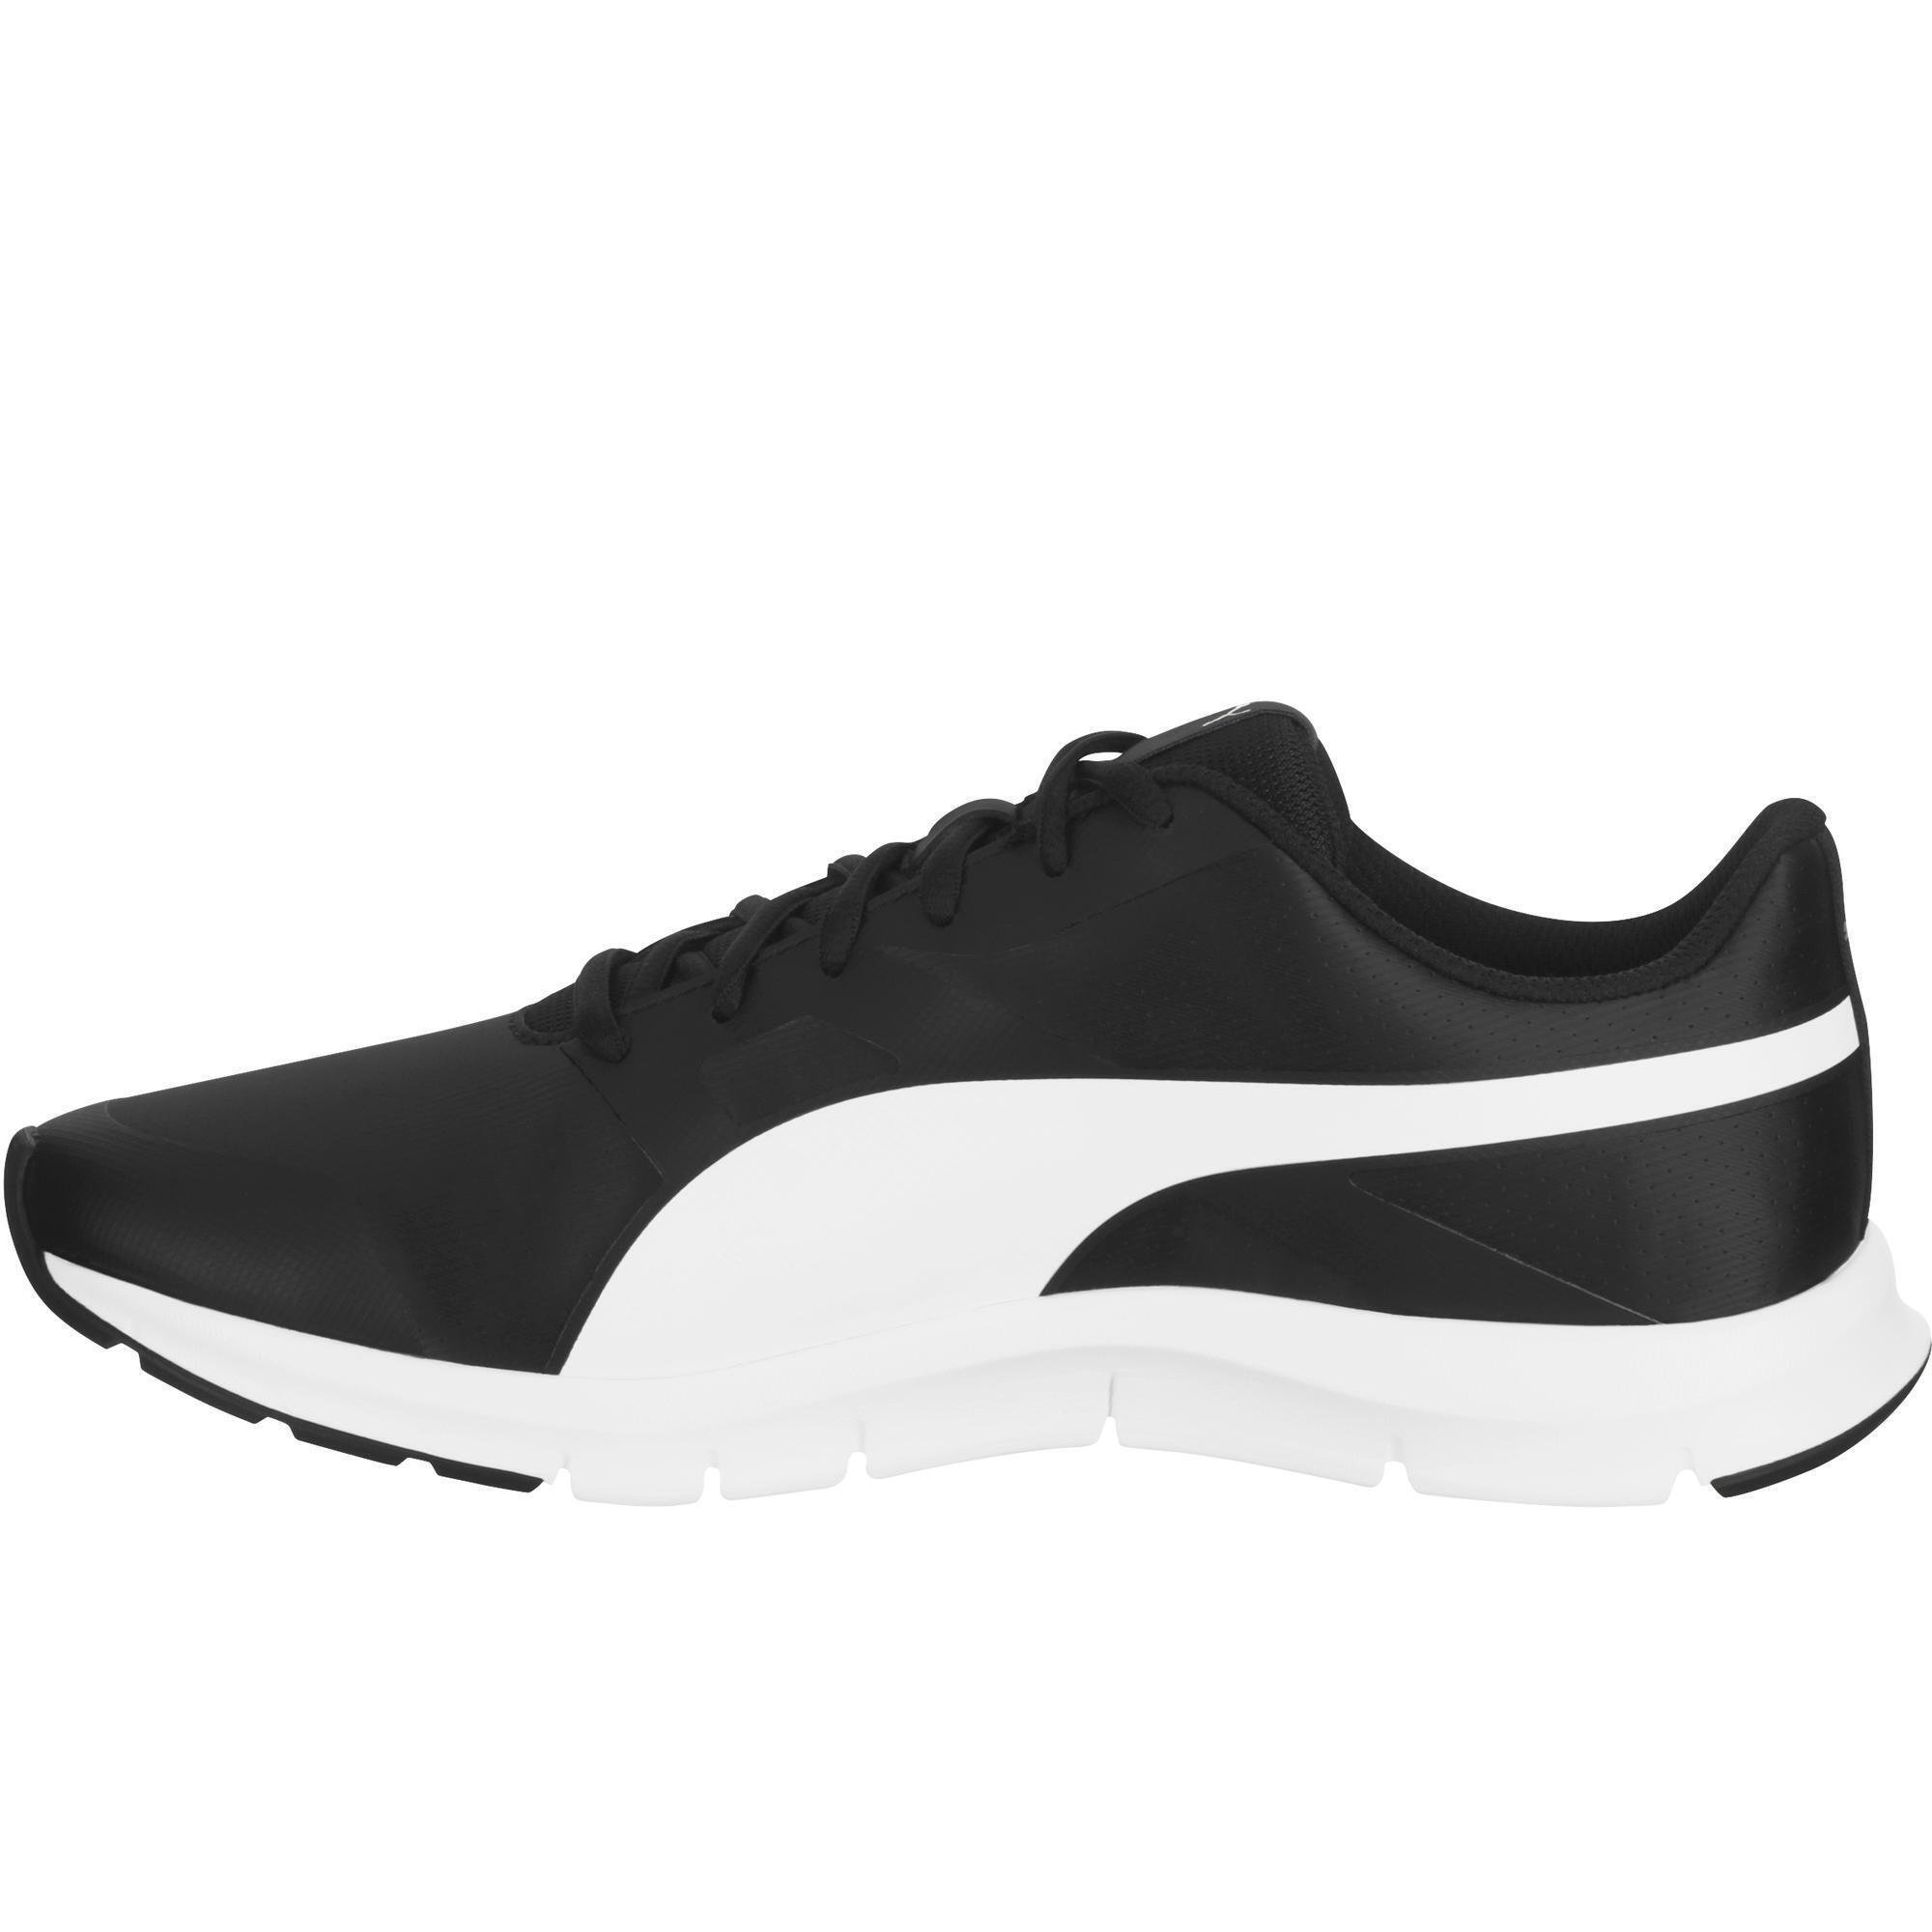 Flexracer men's active walking shoes - black 3/9